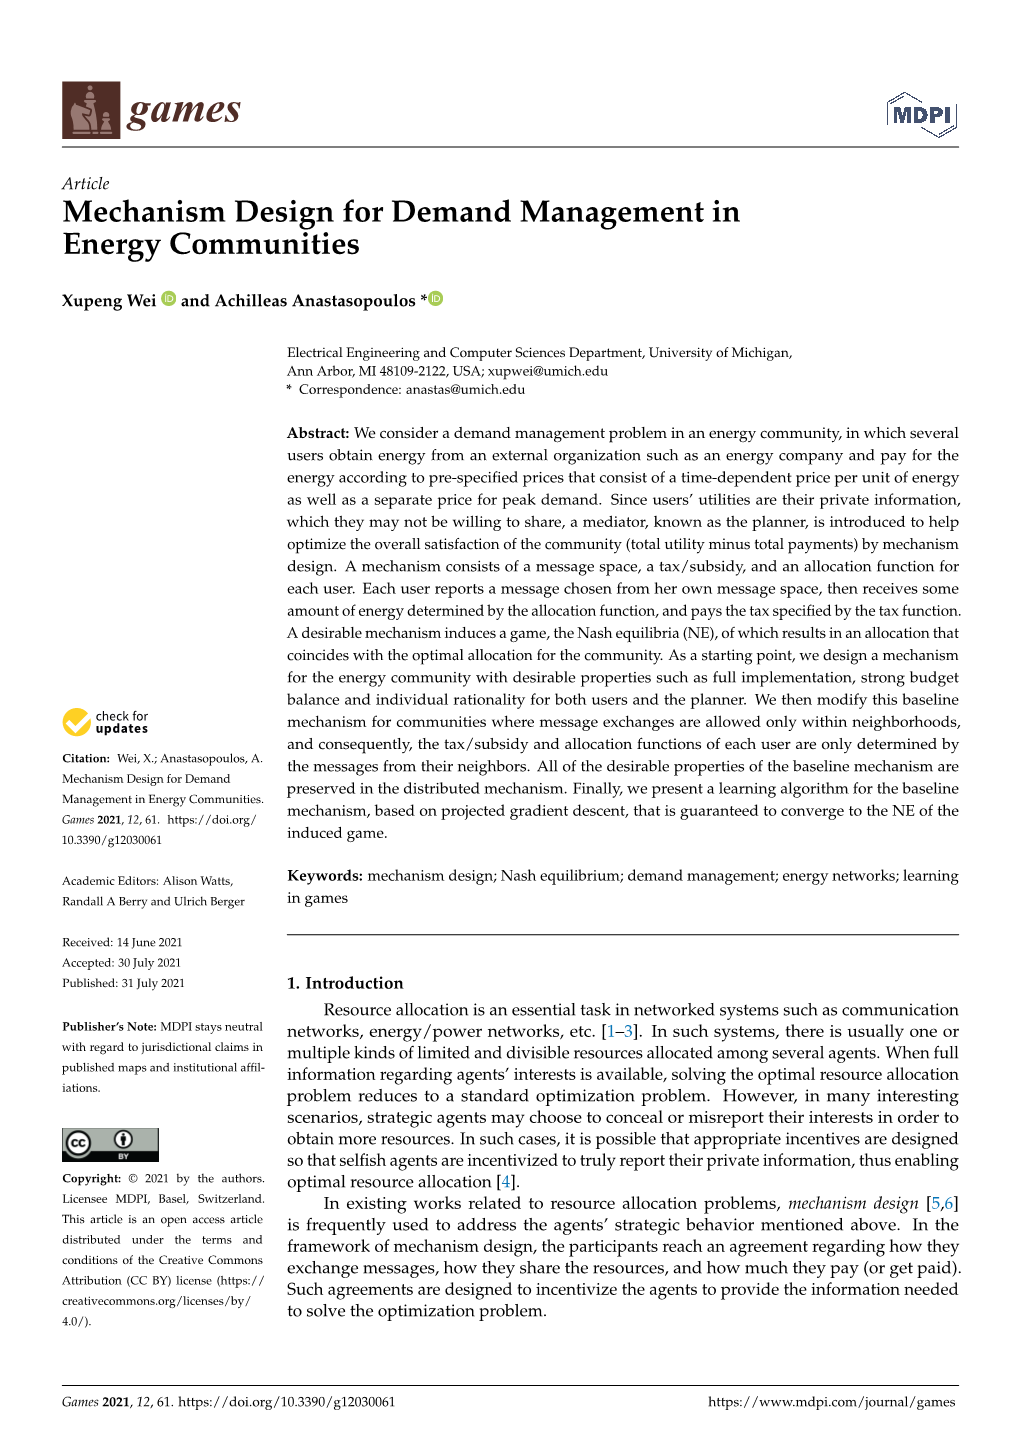 Mechanism Design for Demand Management in Energy Communities